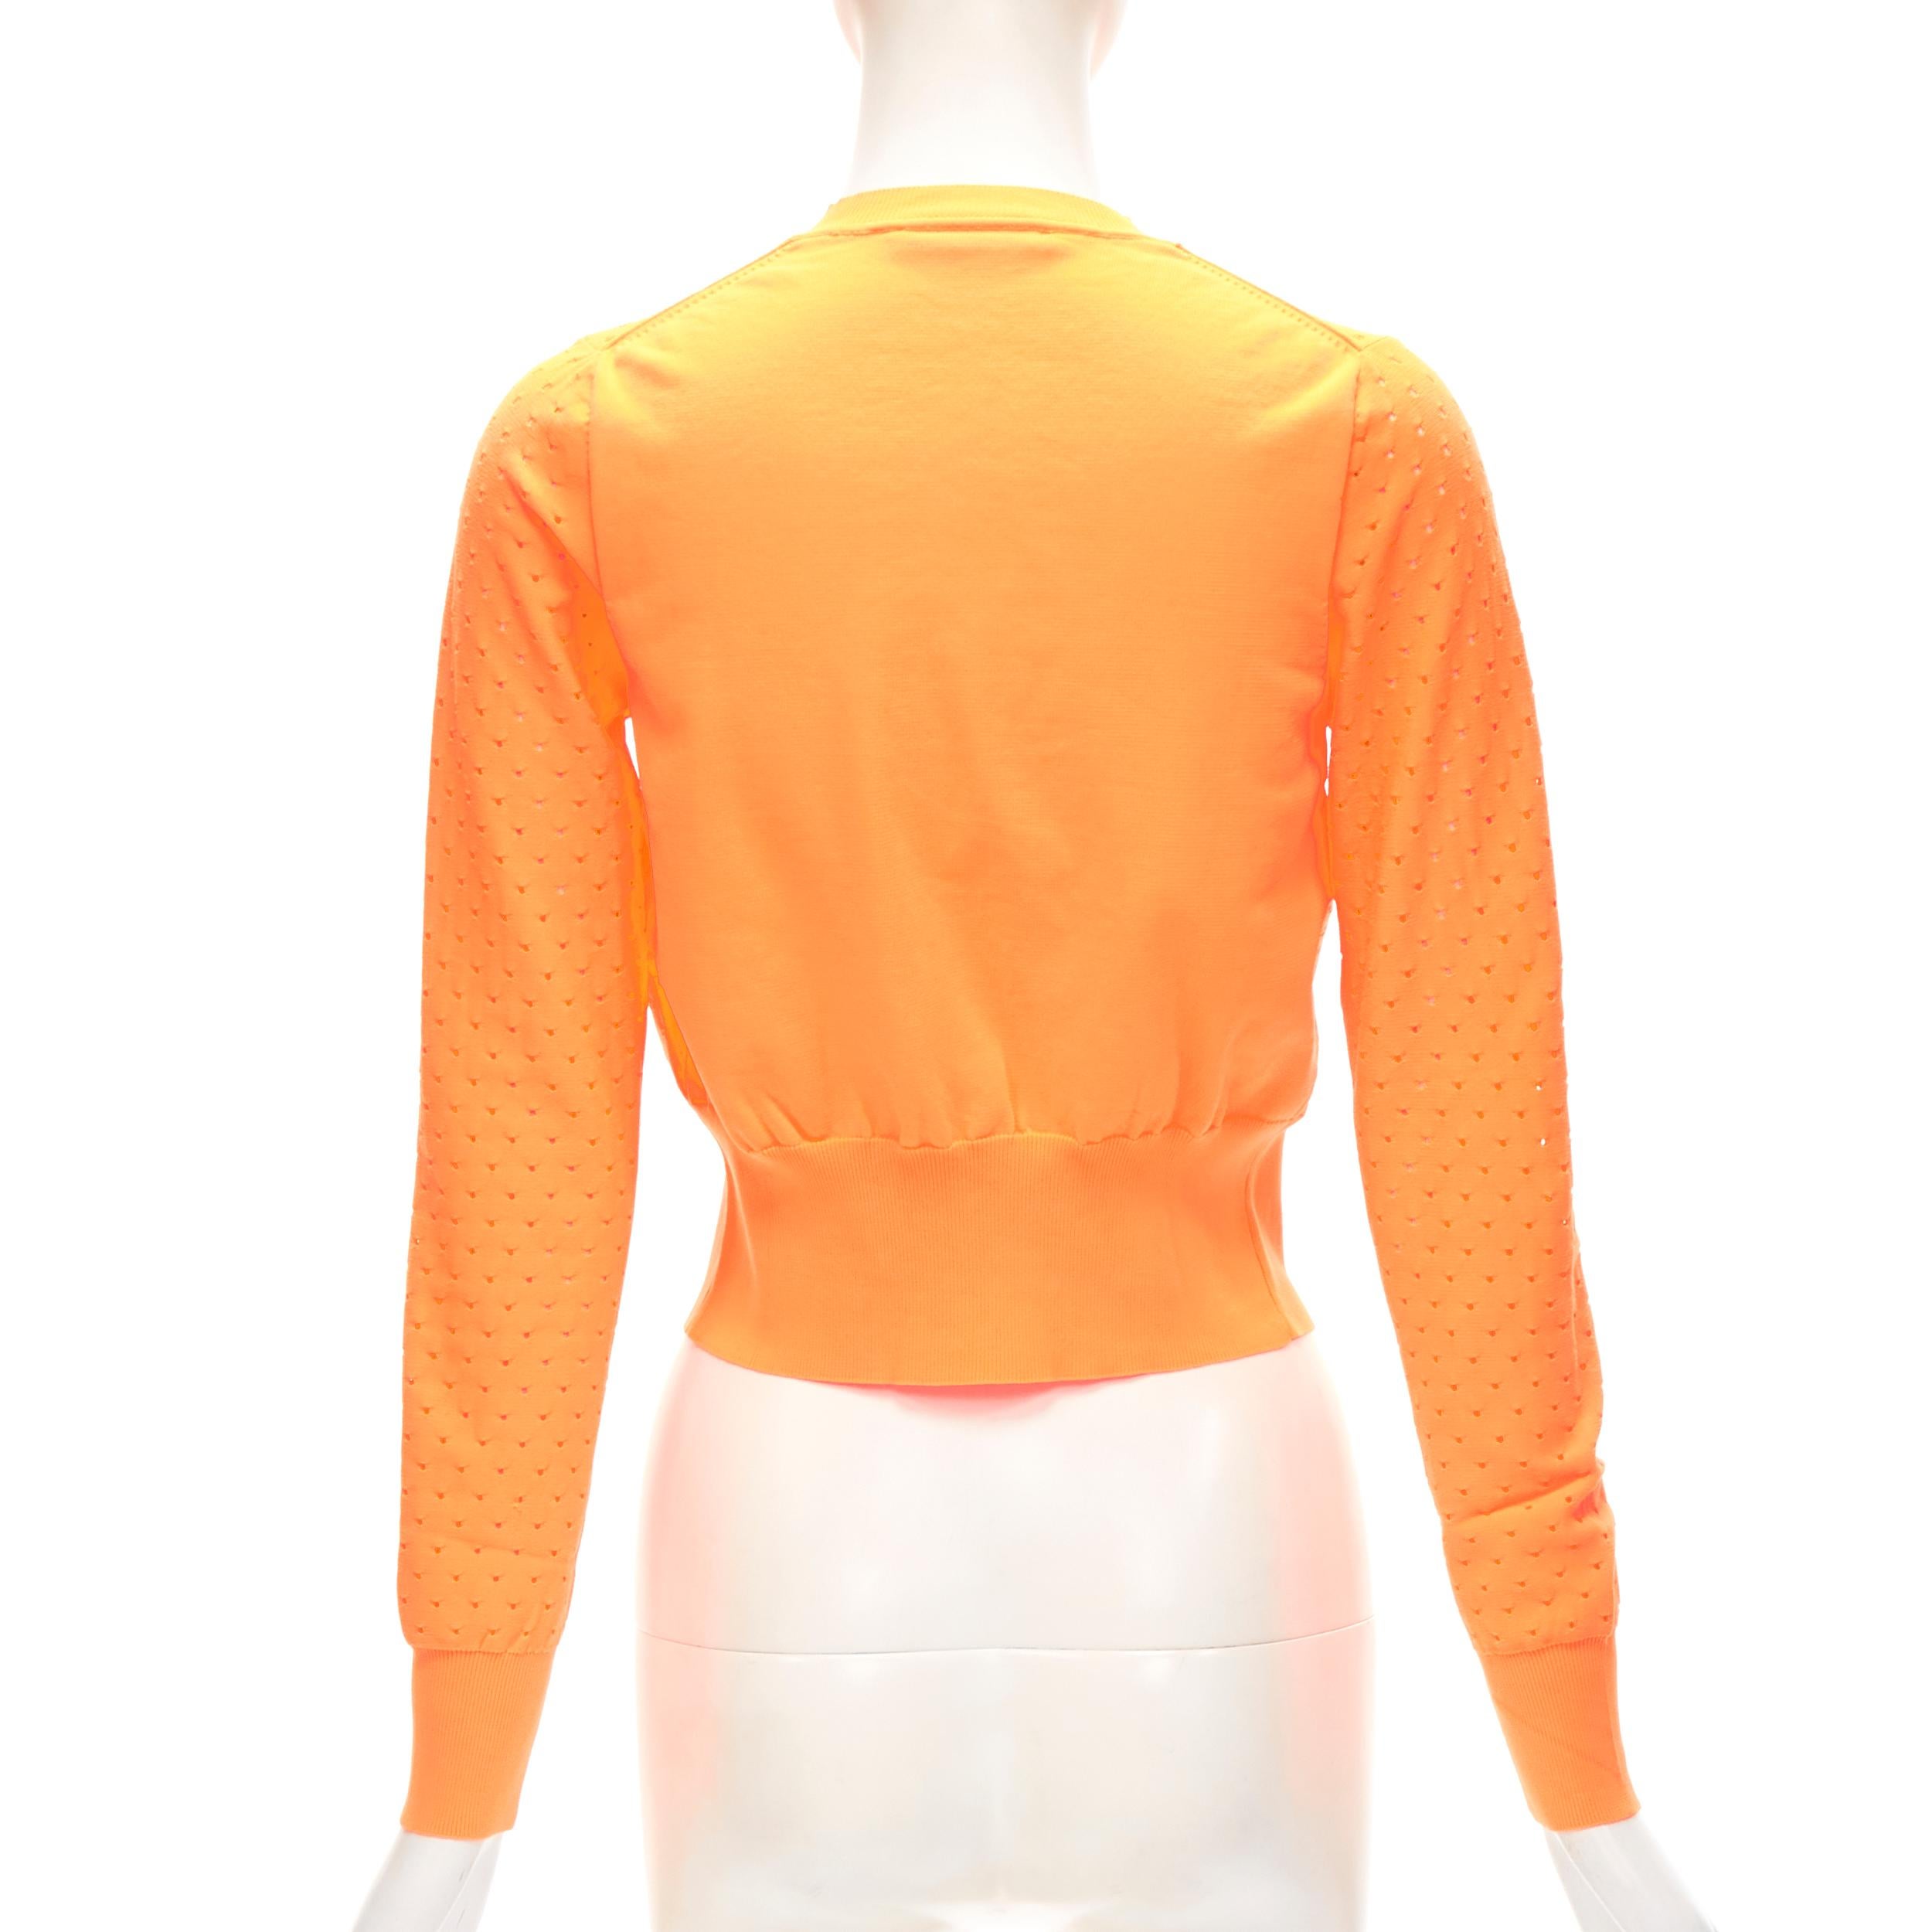 Orange ACNE STUDIO neon orange perforated cropped cardigan sweater S